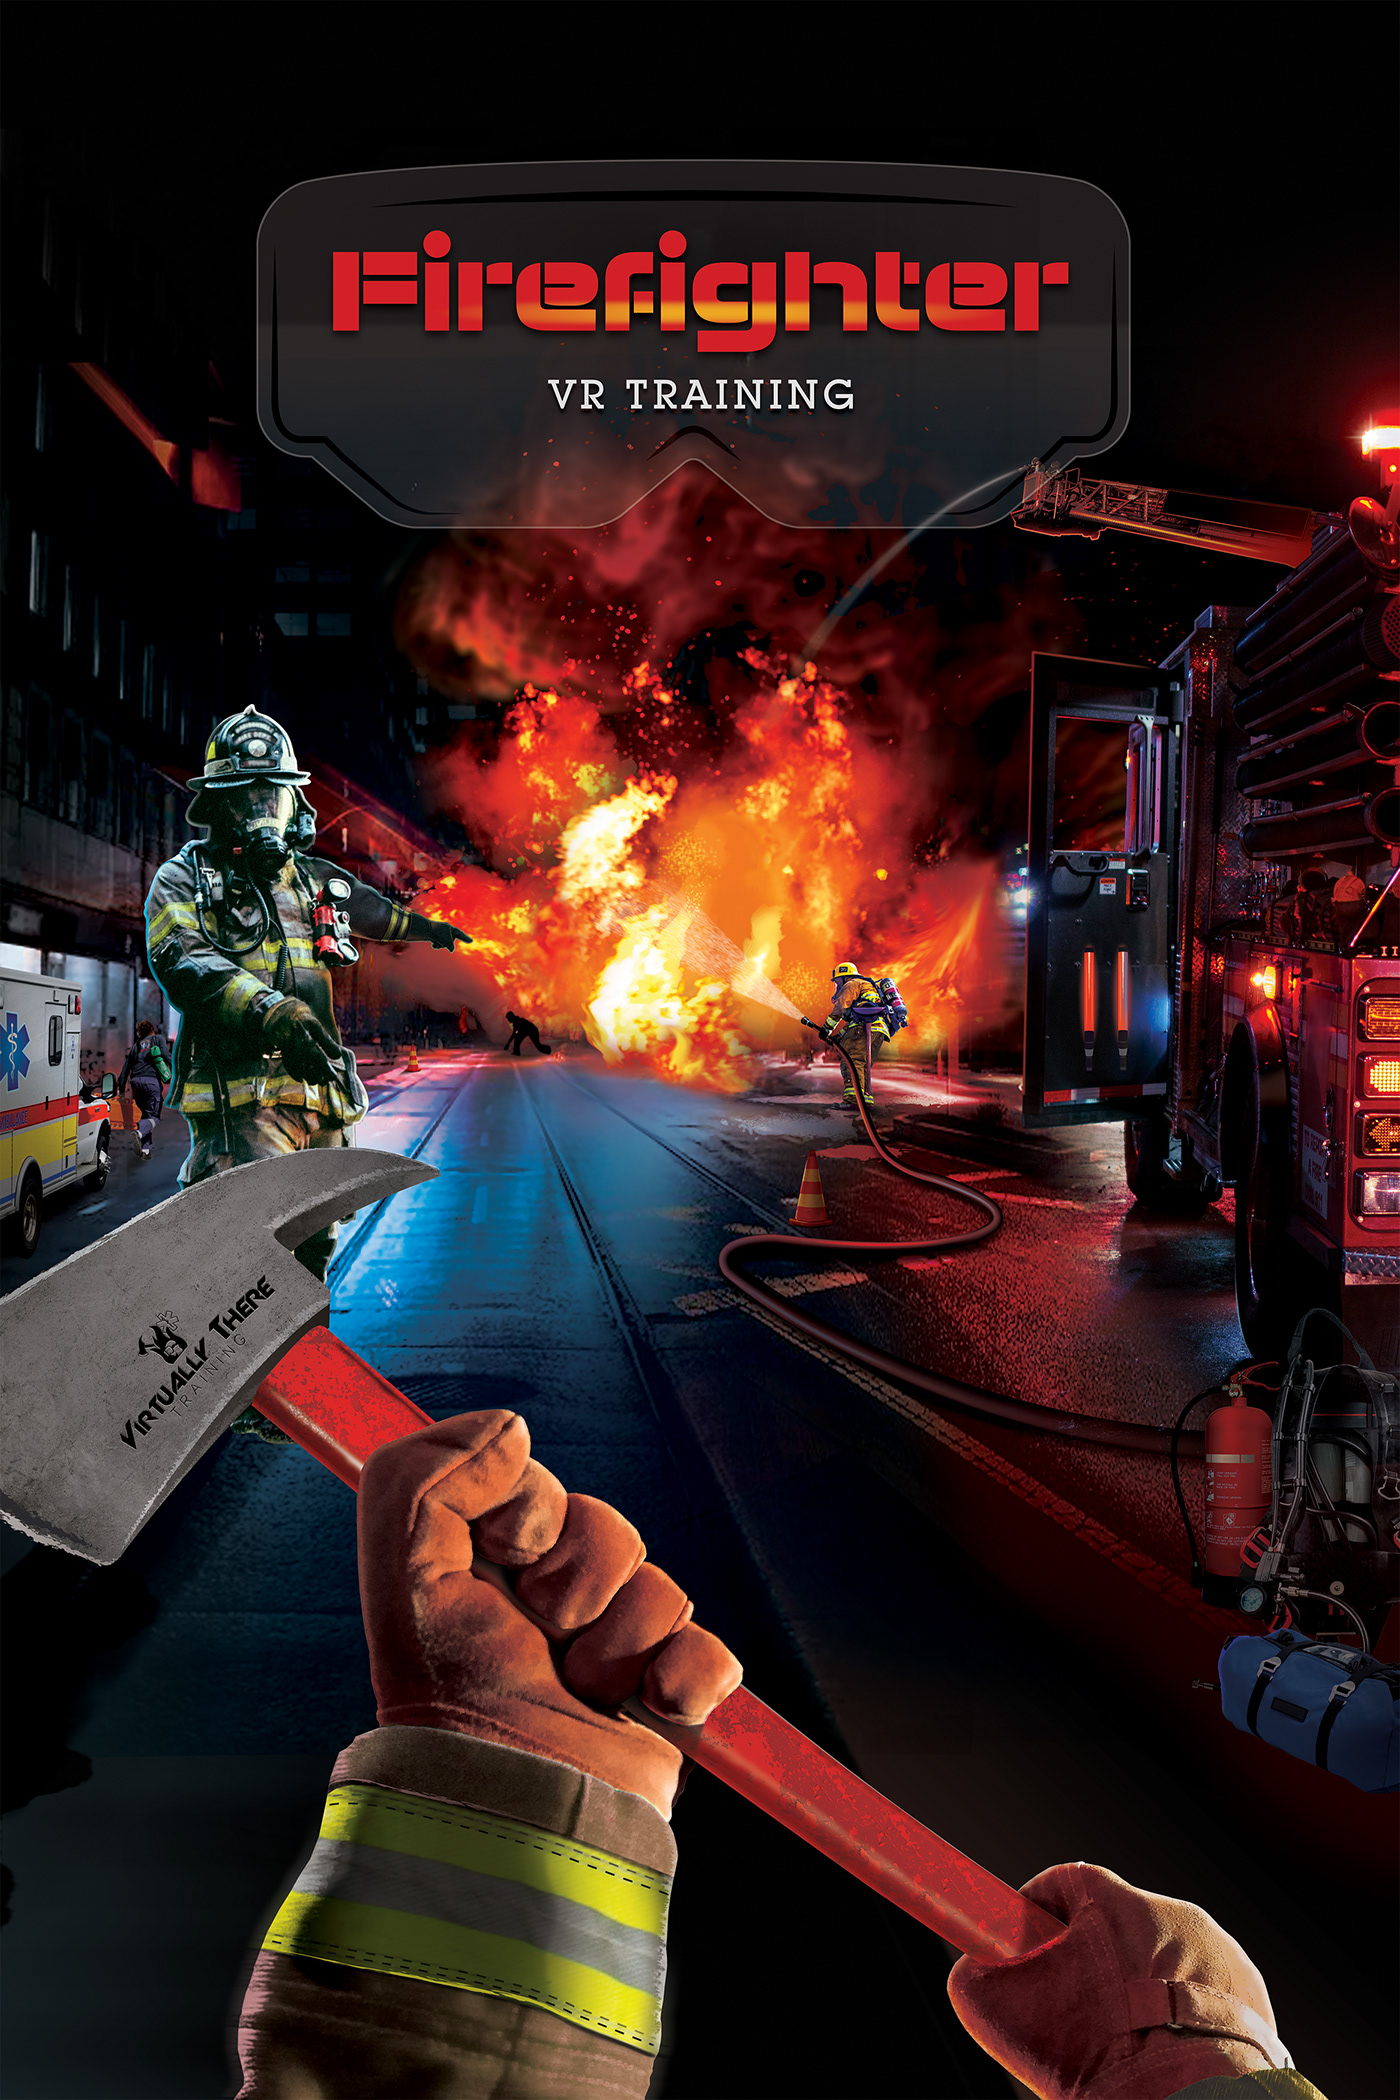 Digital illustration and poster design for a Firefighter training VR software